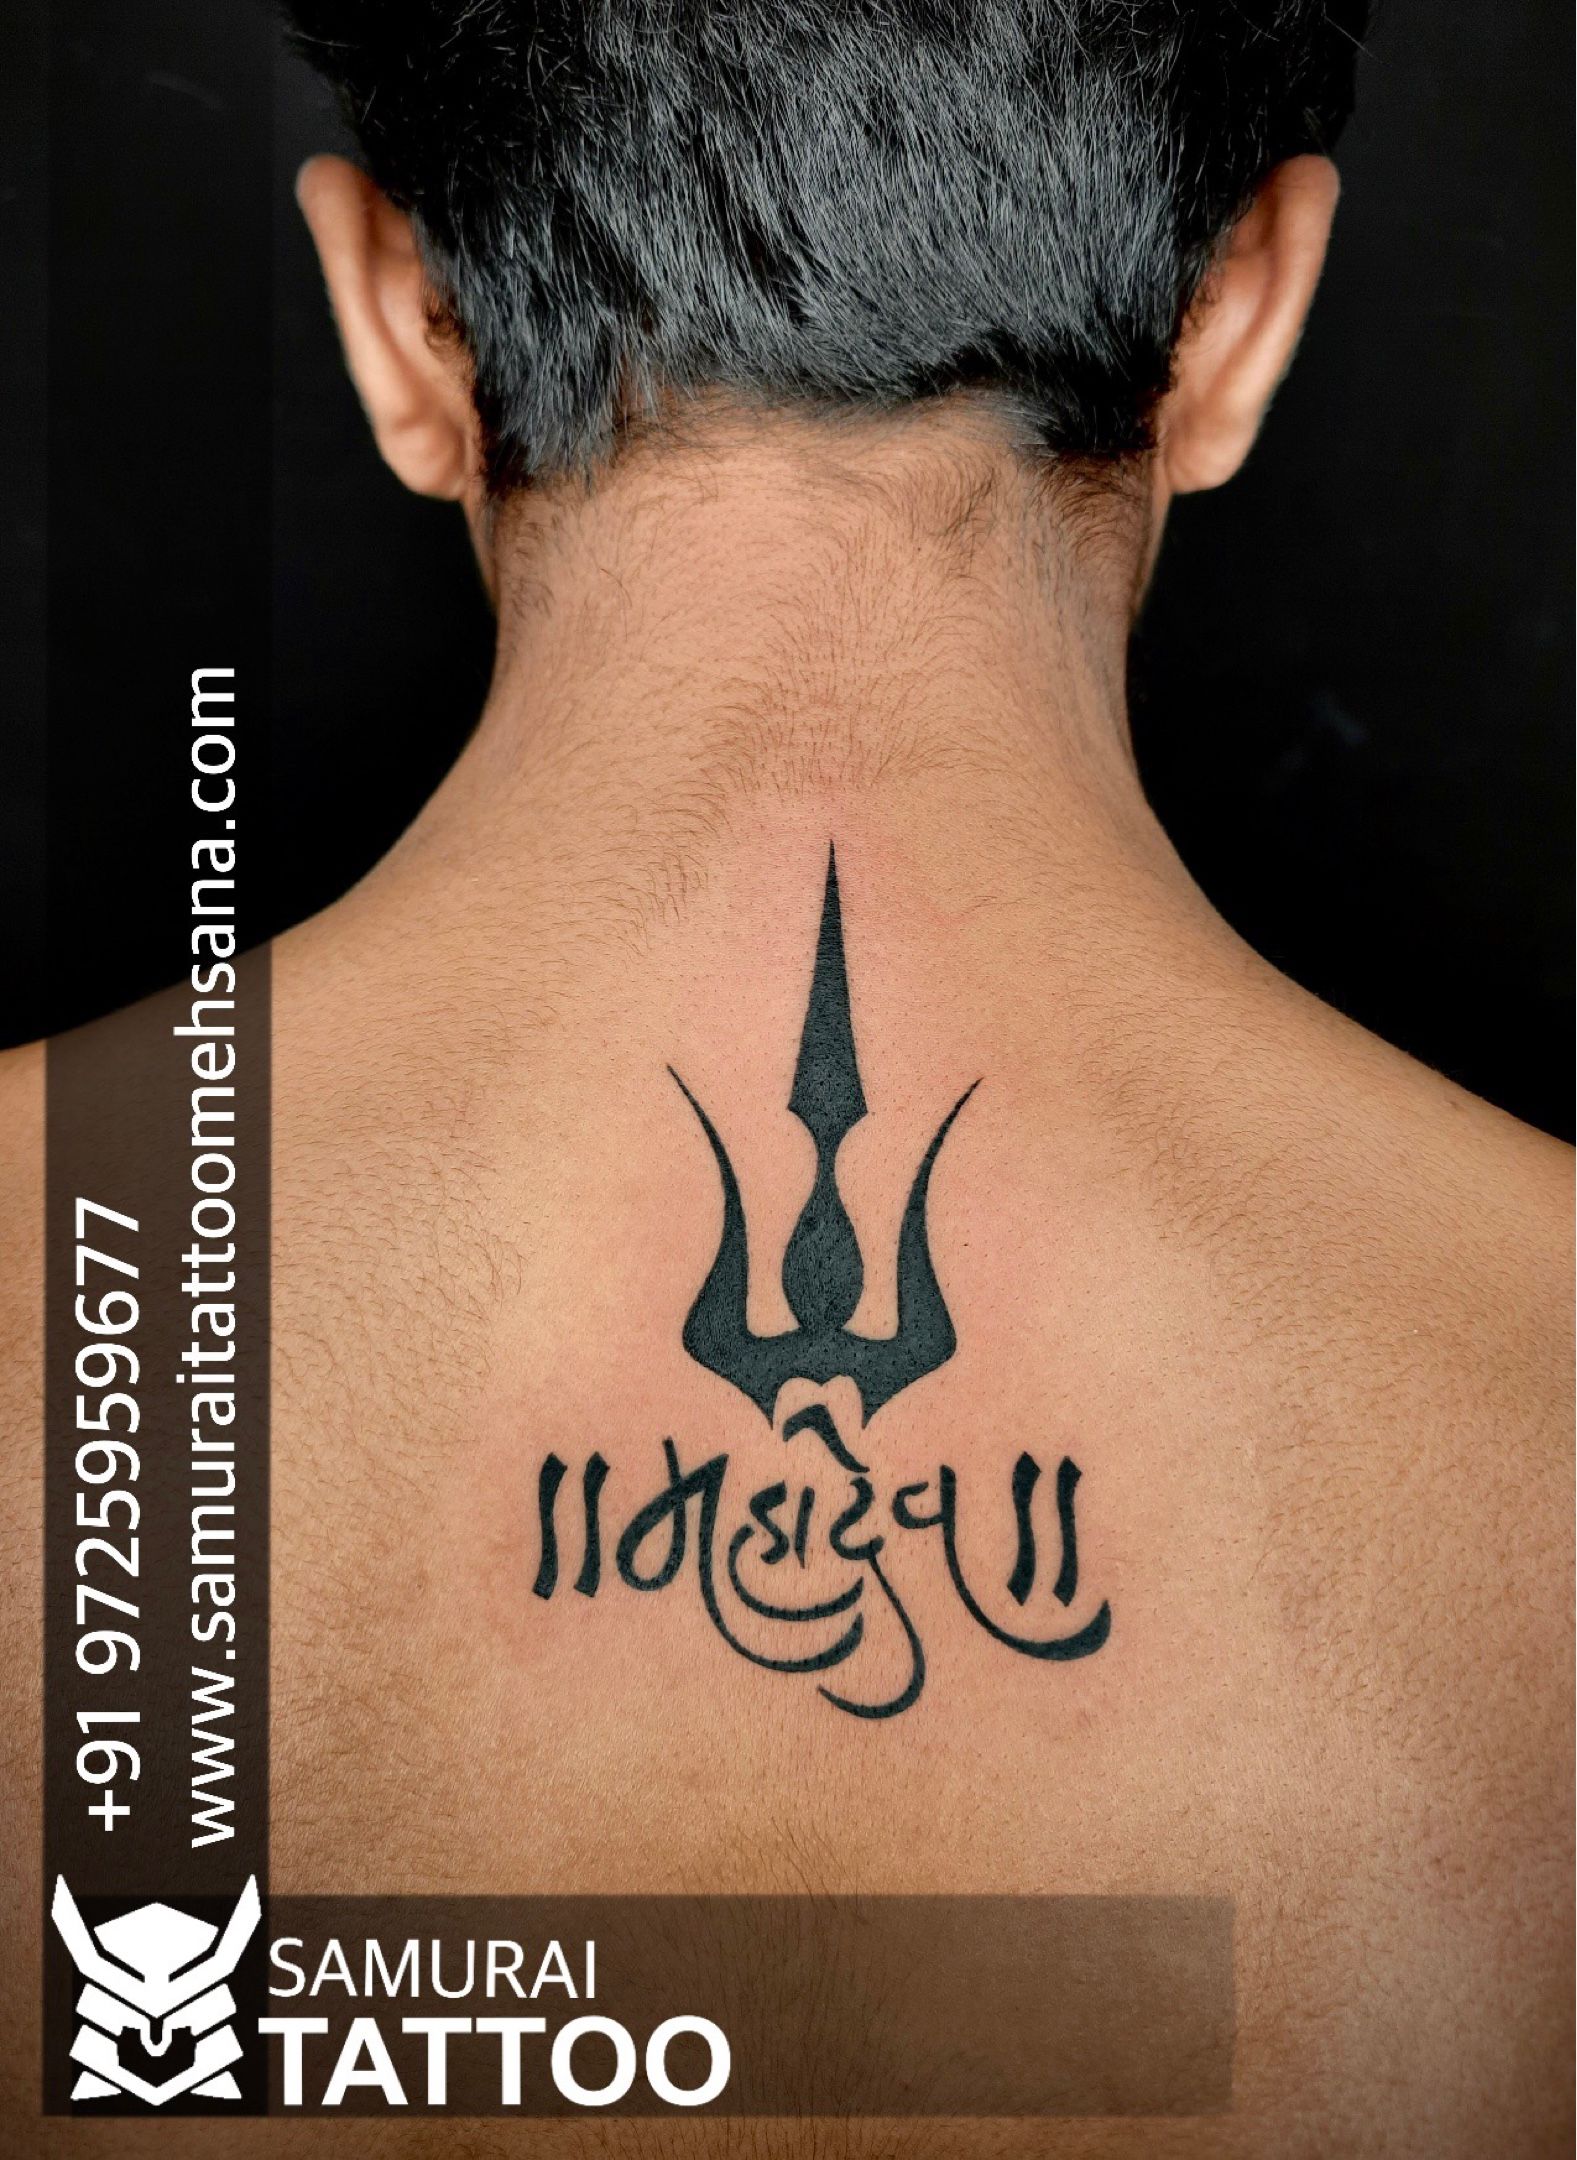 mahadev tattoo  mahadev tattoo lordshiva tattoo shivatat  Flickr